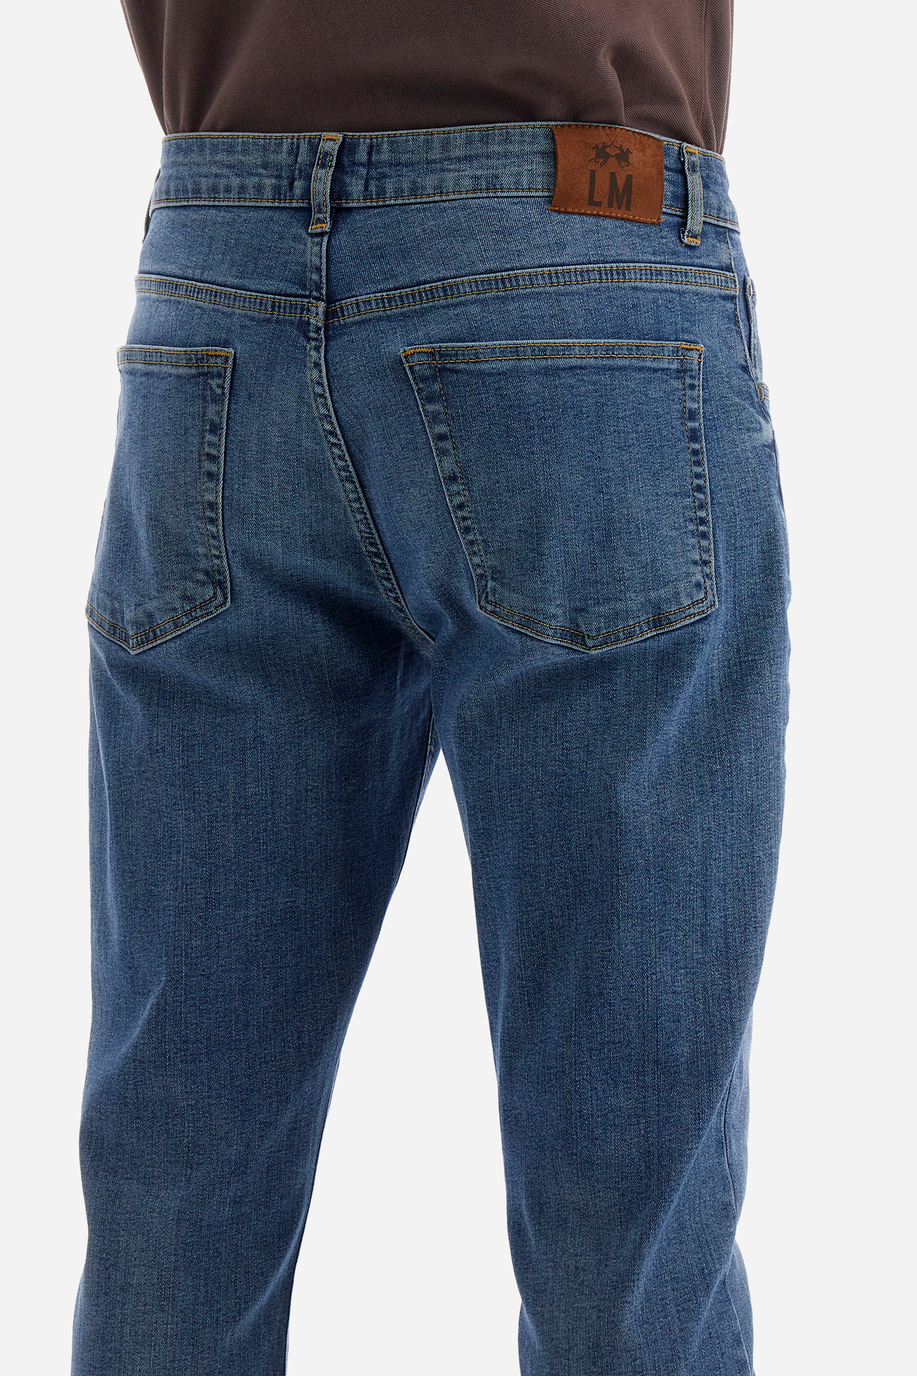 Jeans 5 tasche regular fit in cotone - Yosef - Pantaloni | La Martina - Official Online Shop